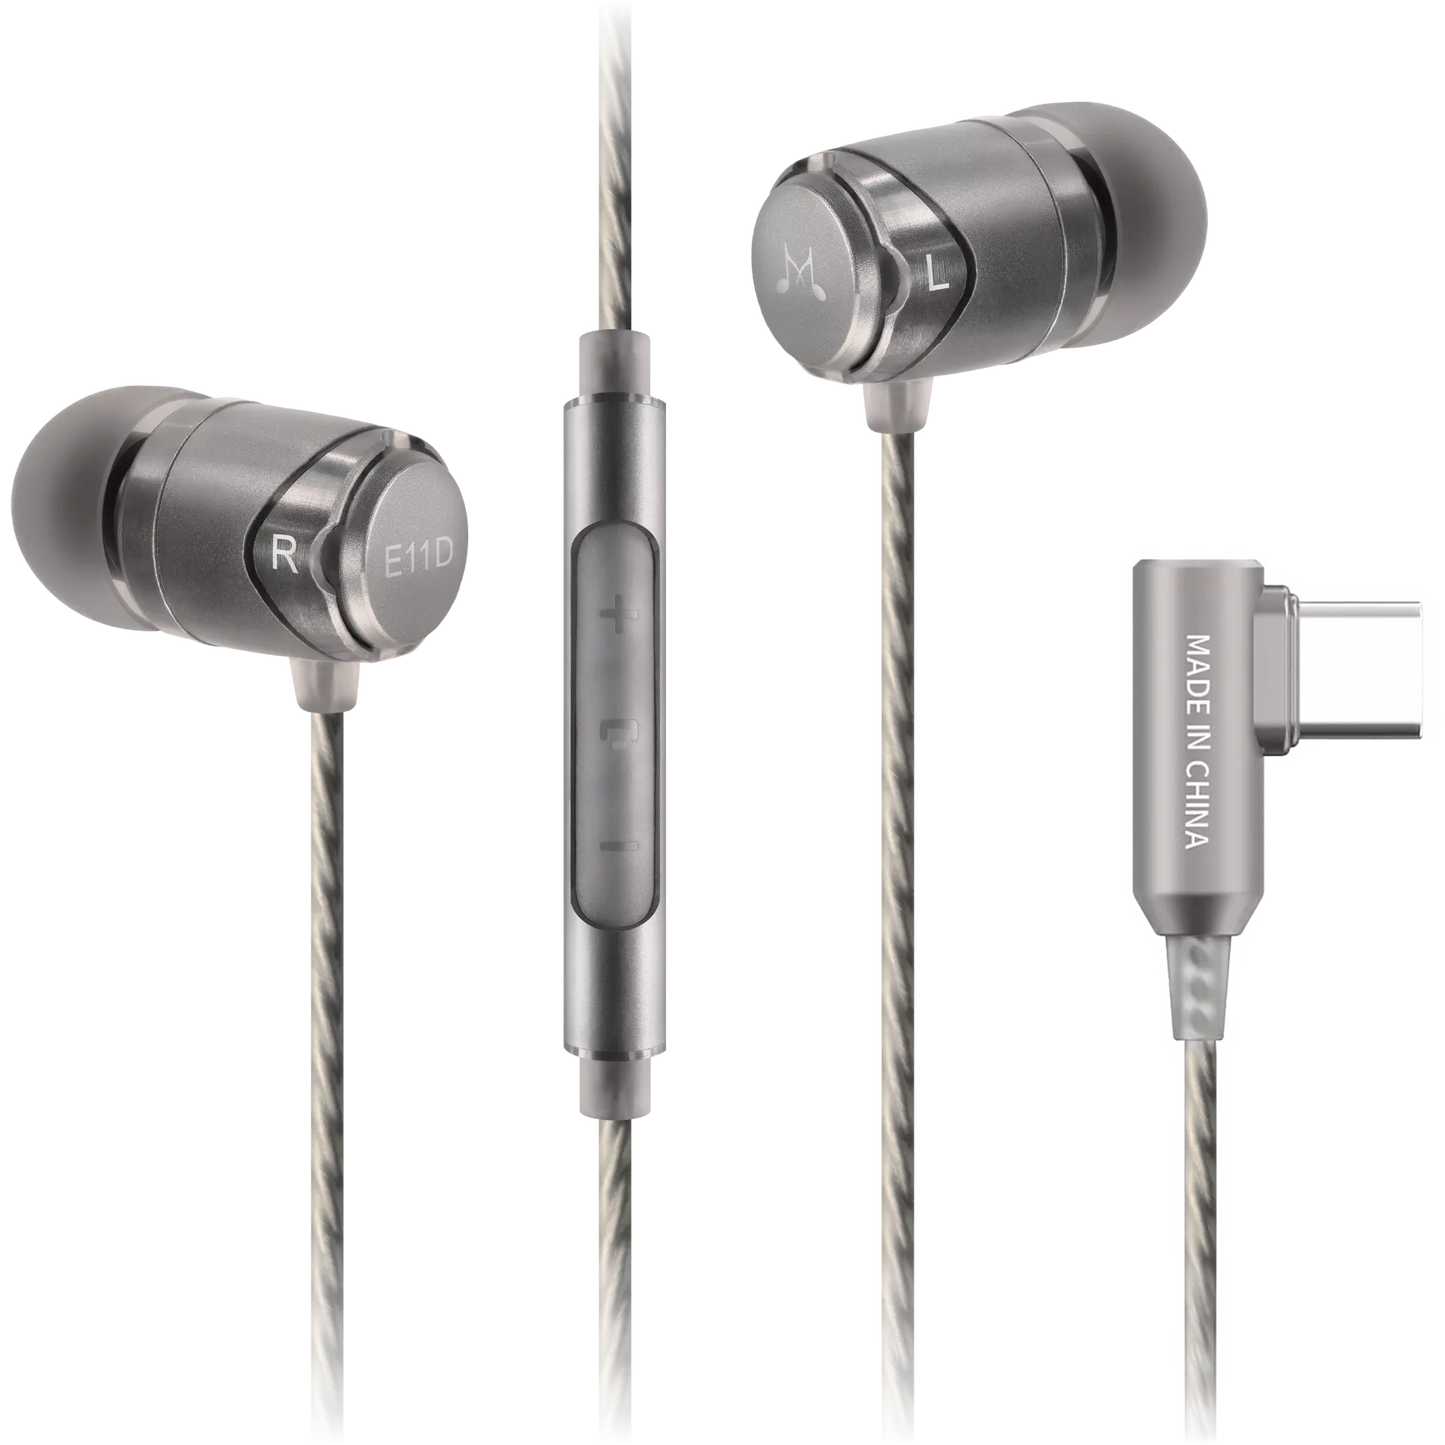 SoundMAGIC E11D In Ear Isolating USB-C Earphones with DAC